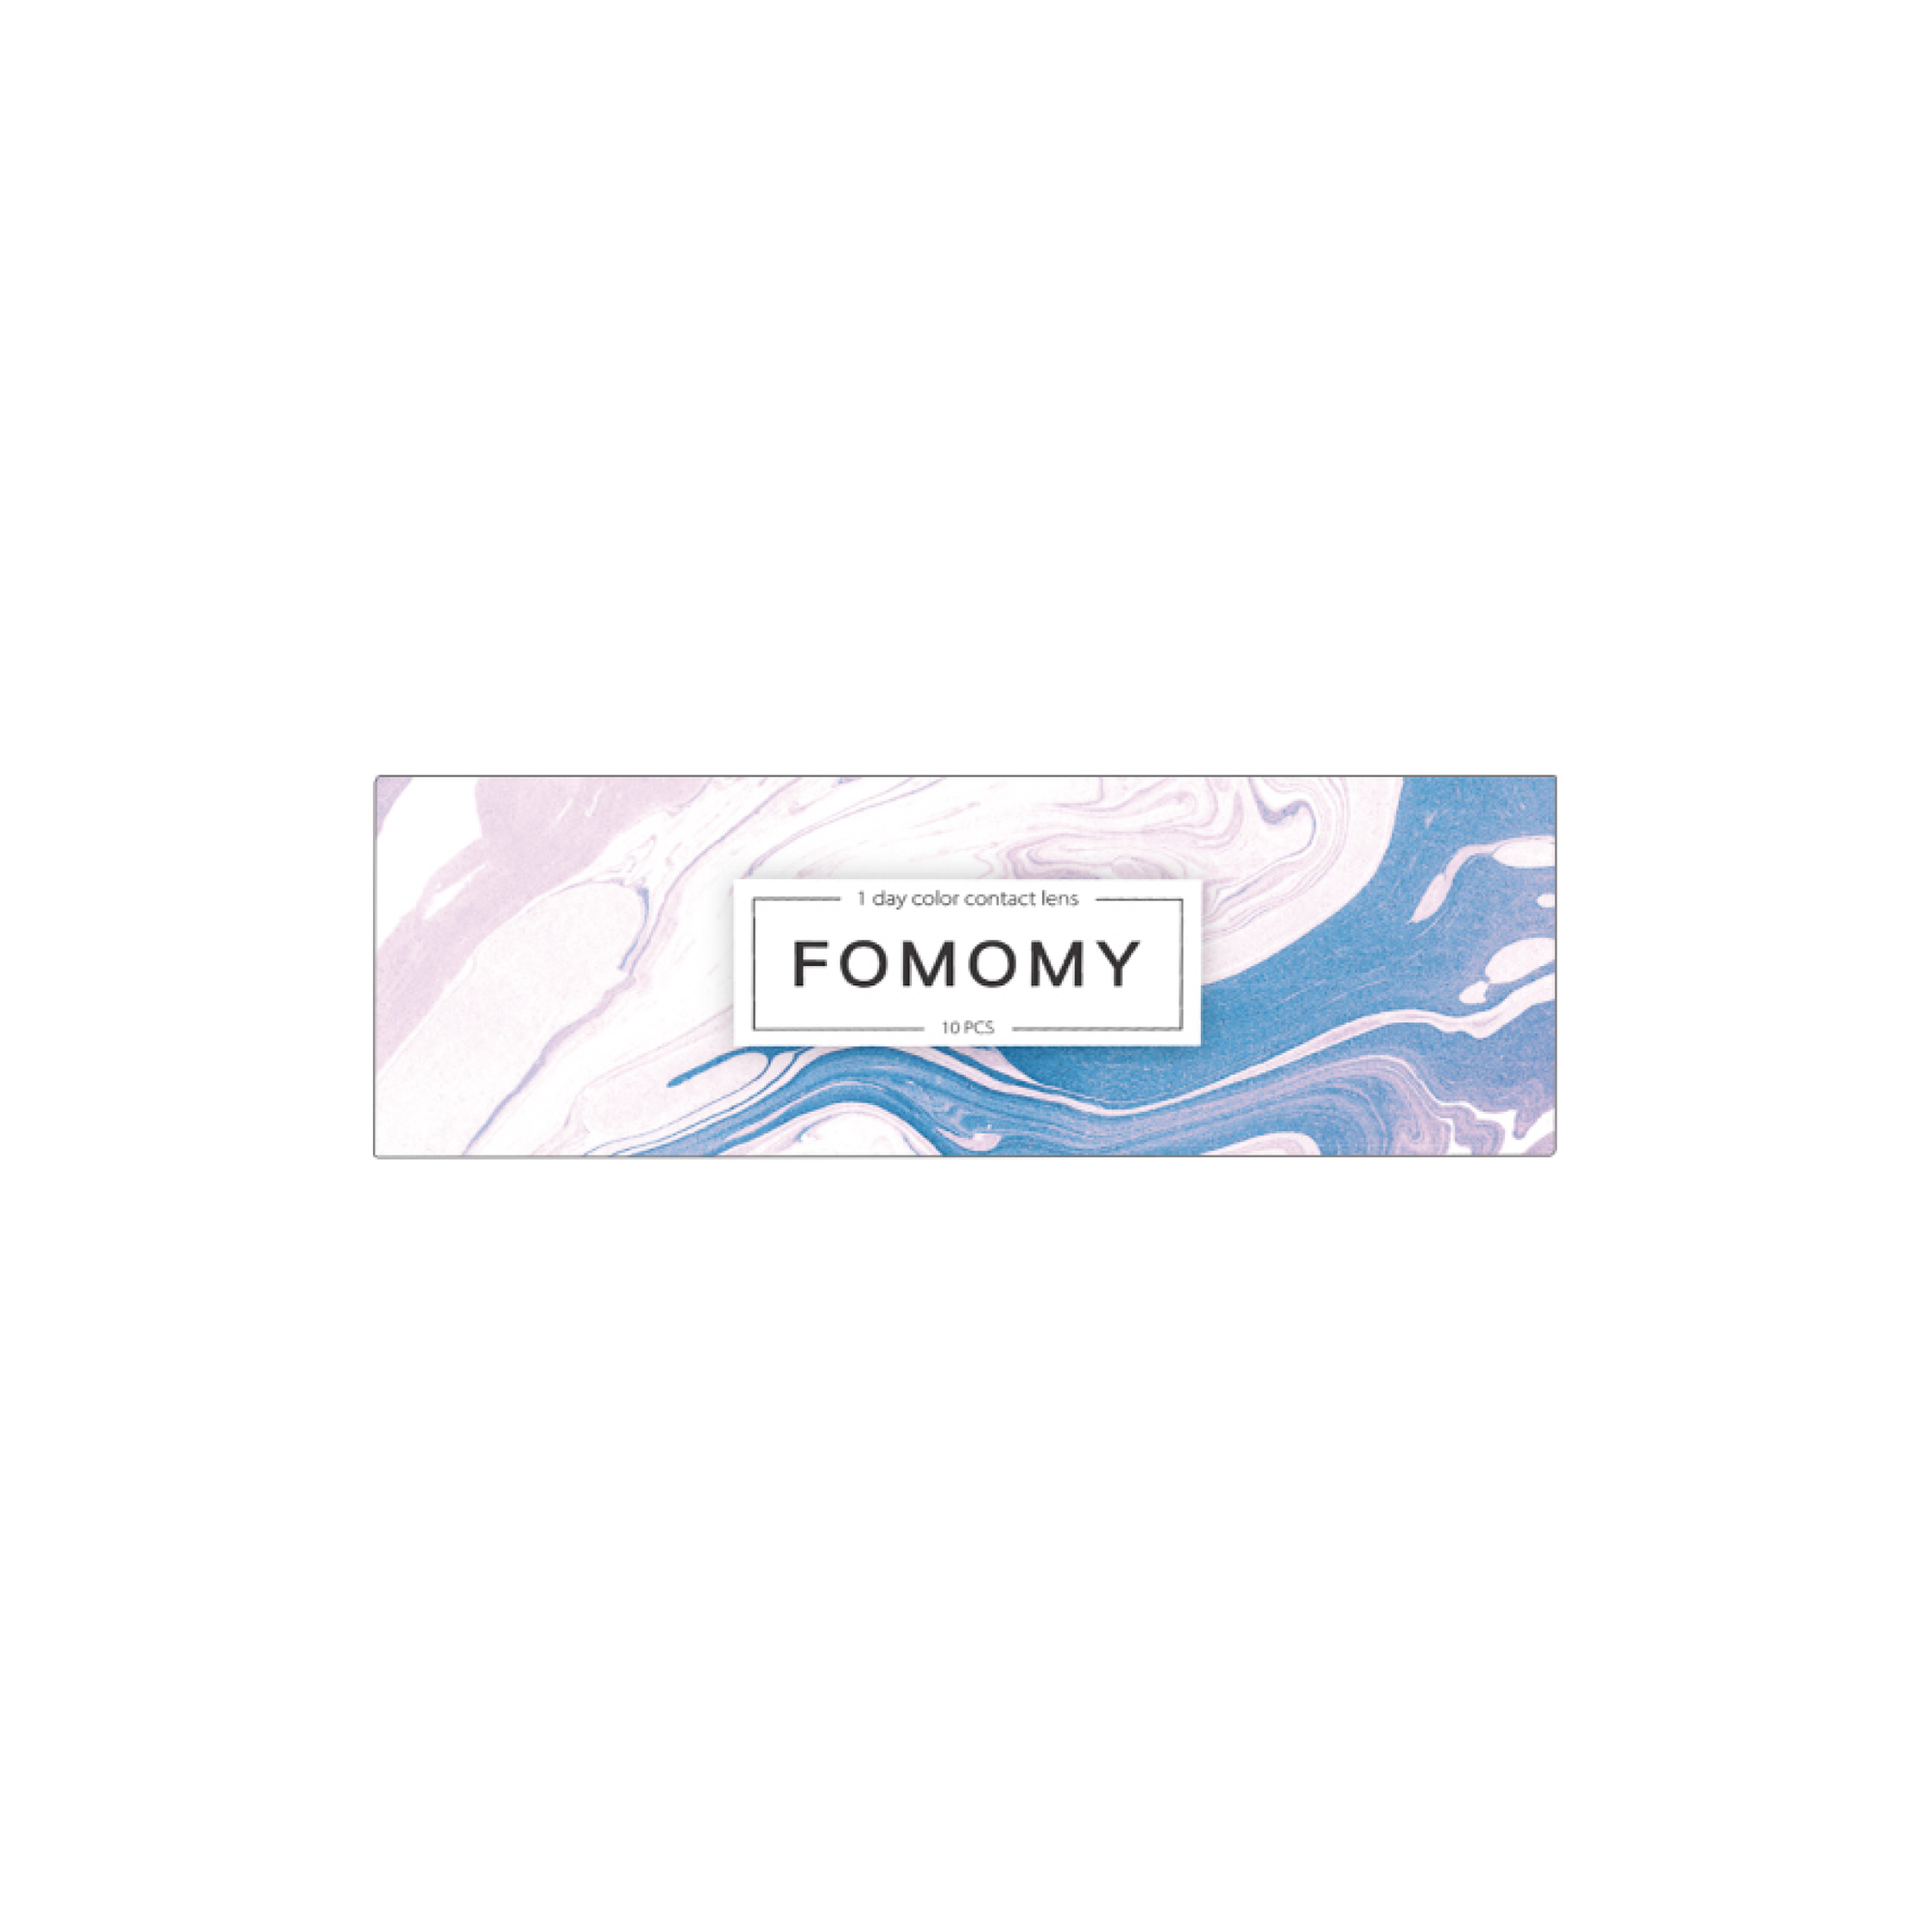 Fomomy 1-Day color contact lens #Honey tan日抛美瞳蜜糖褐｜10 Pcs